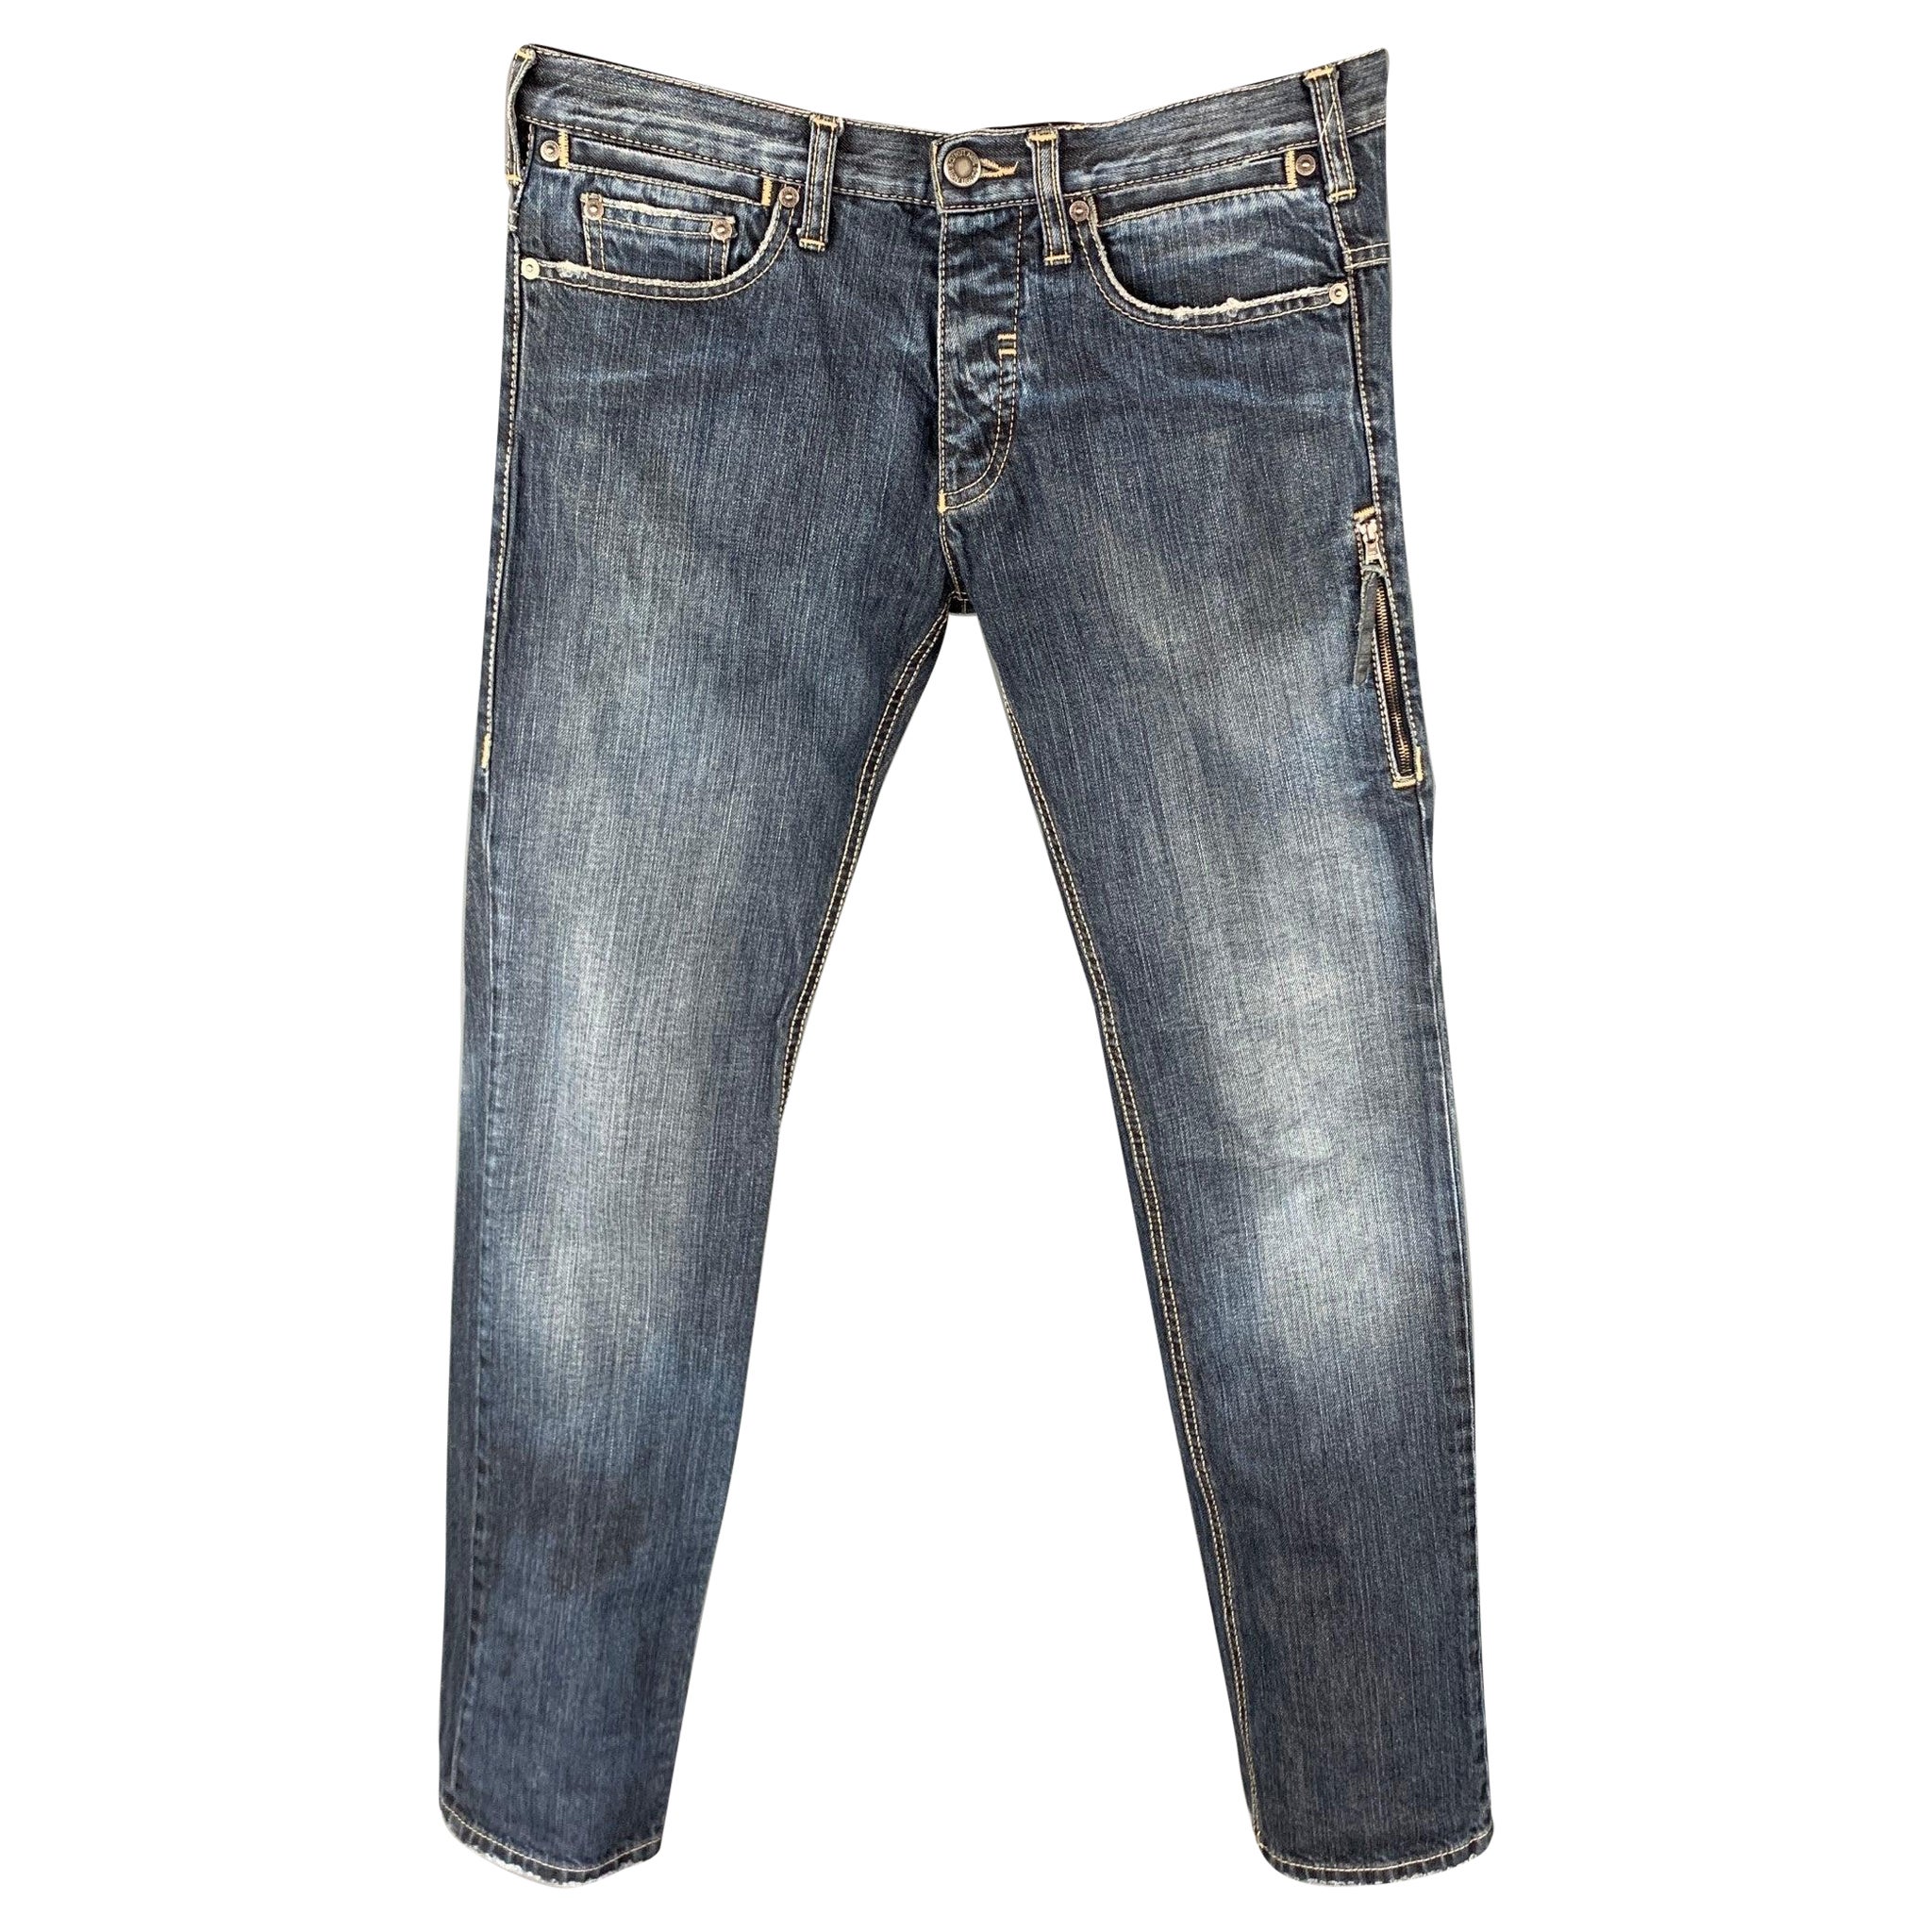 NEIL BARRETT Size 30 Indigo Distressed Denim Button Fly Jeans For Sale